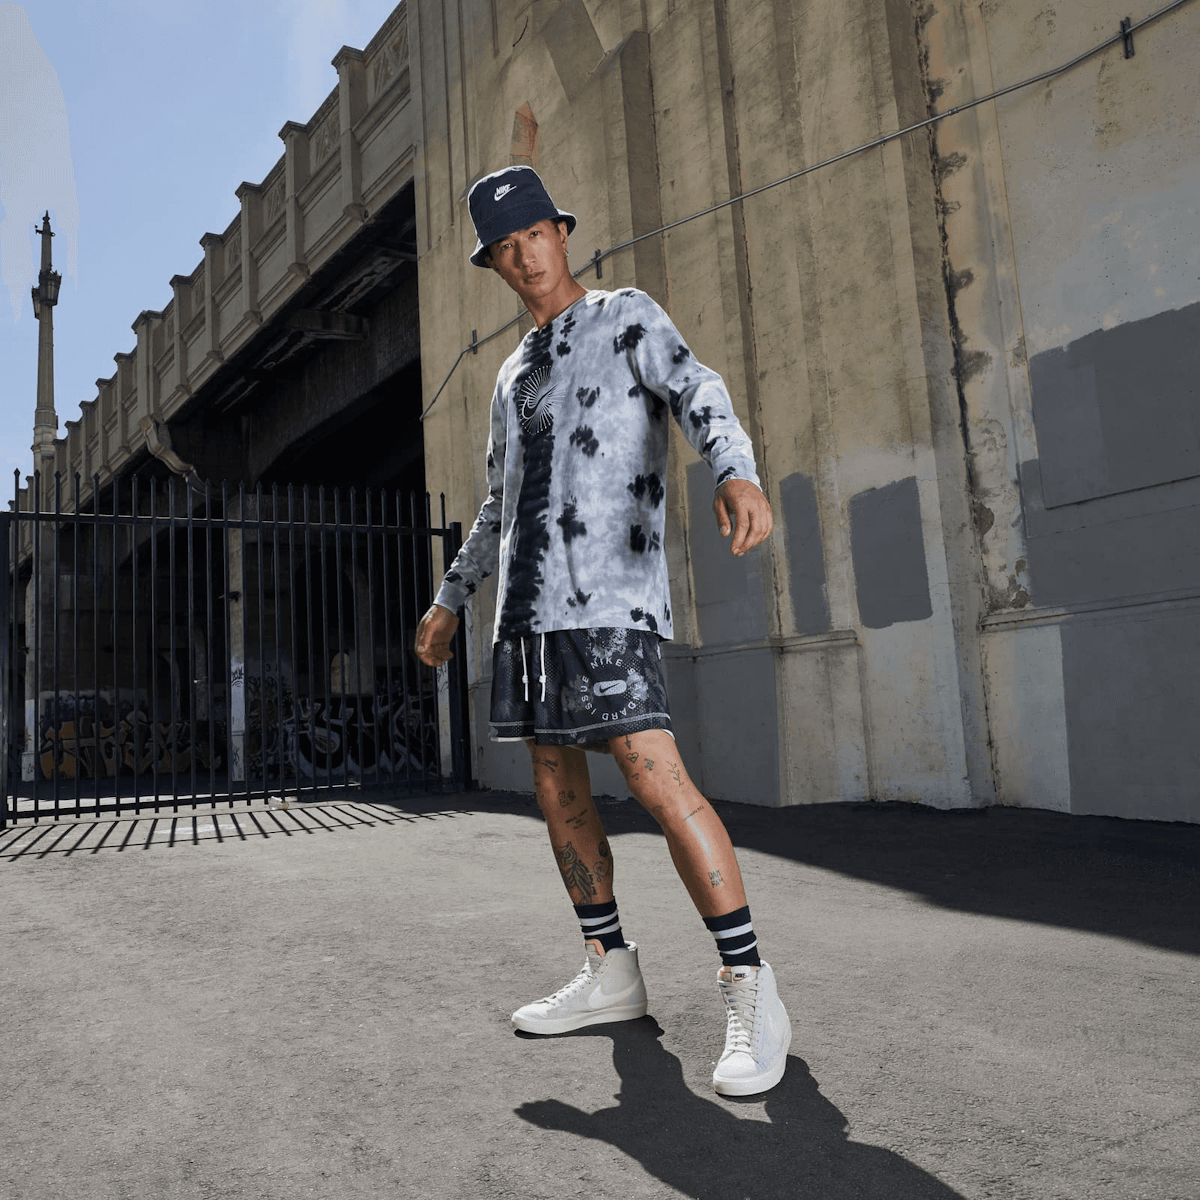 Nike SB Dunk High “Medium Gray” Official Look